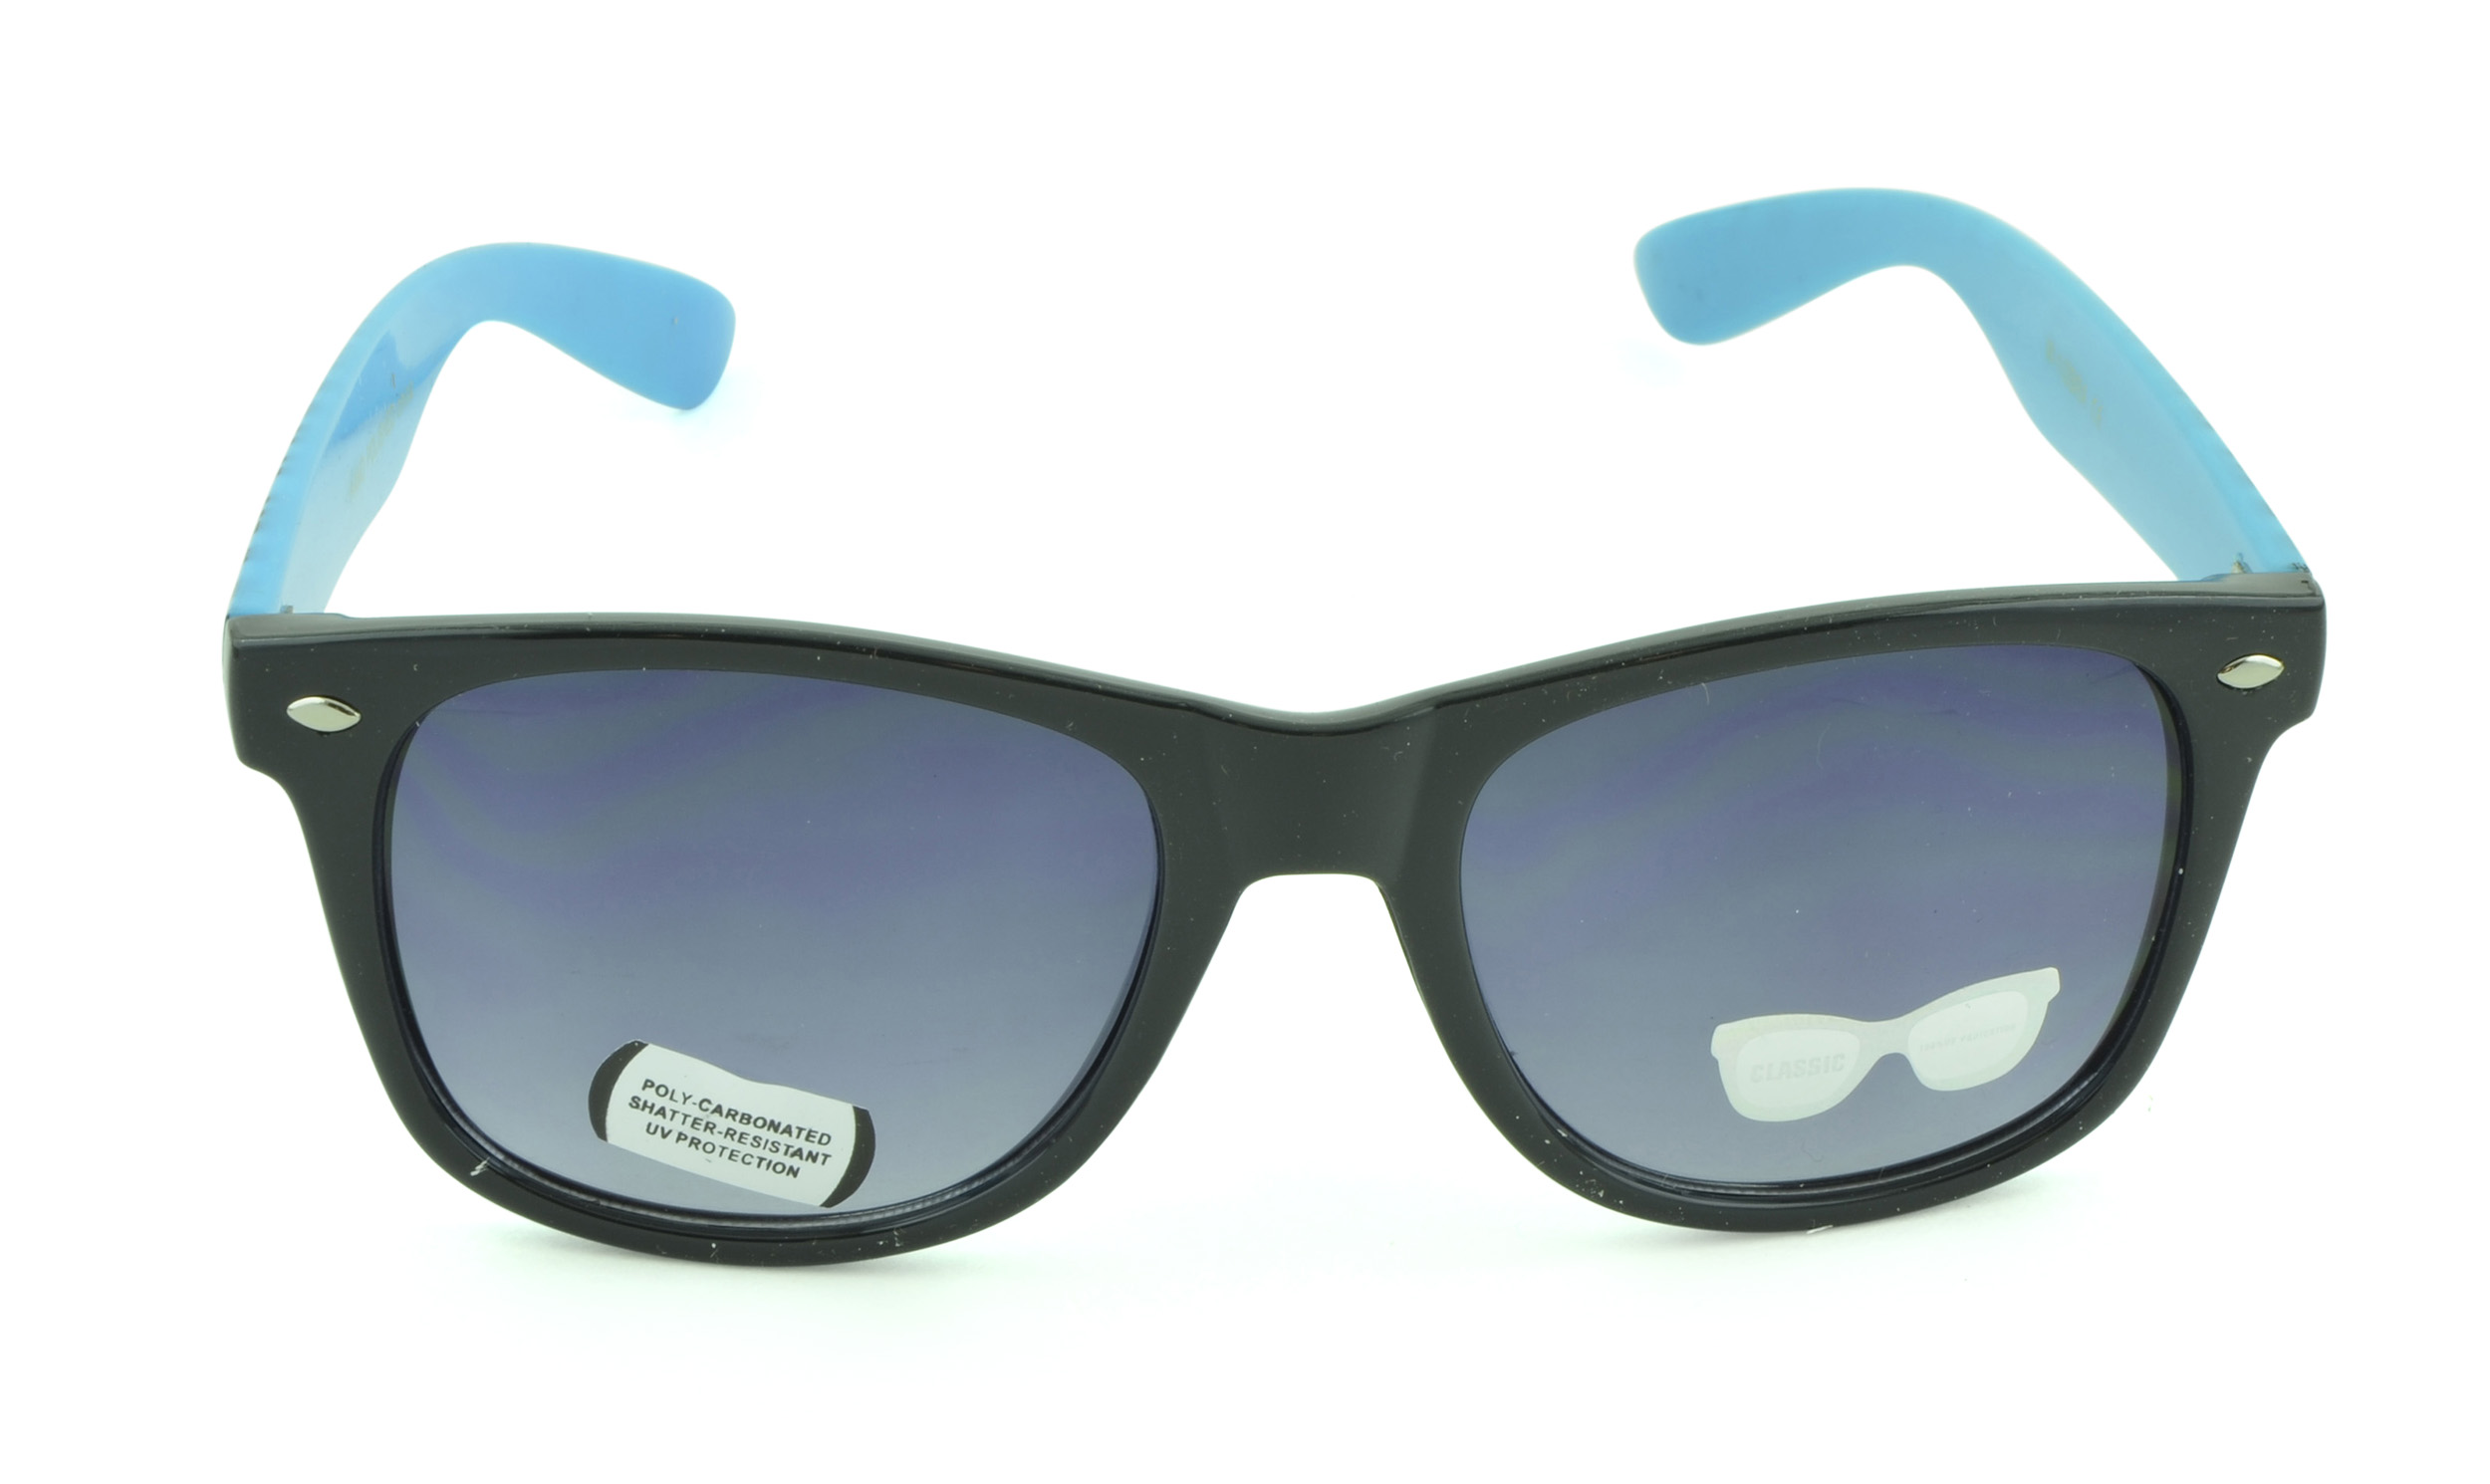 Belle Donne - Wayfarer Style Sunglasses Trendy Cheap Sunglasses High Quality Animal Print - Blue 